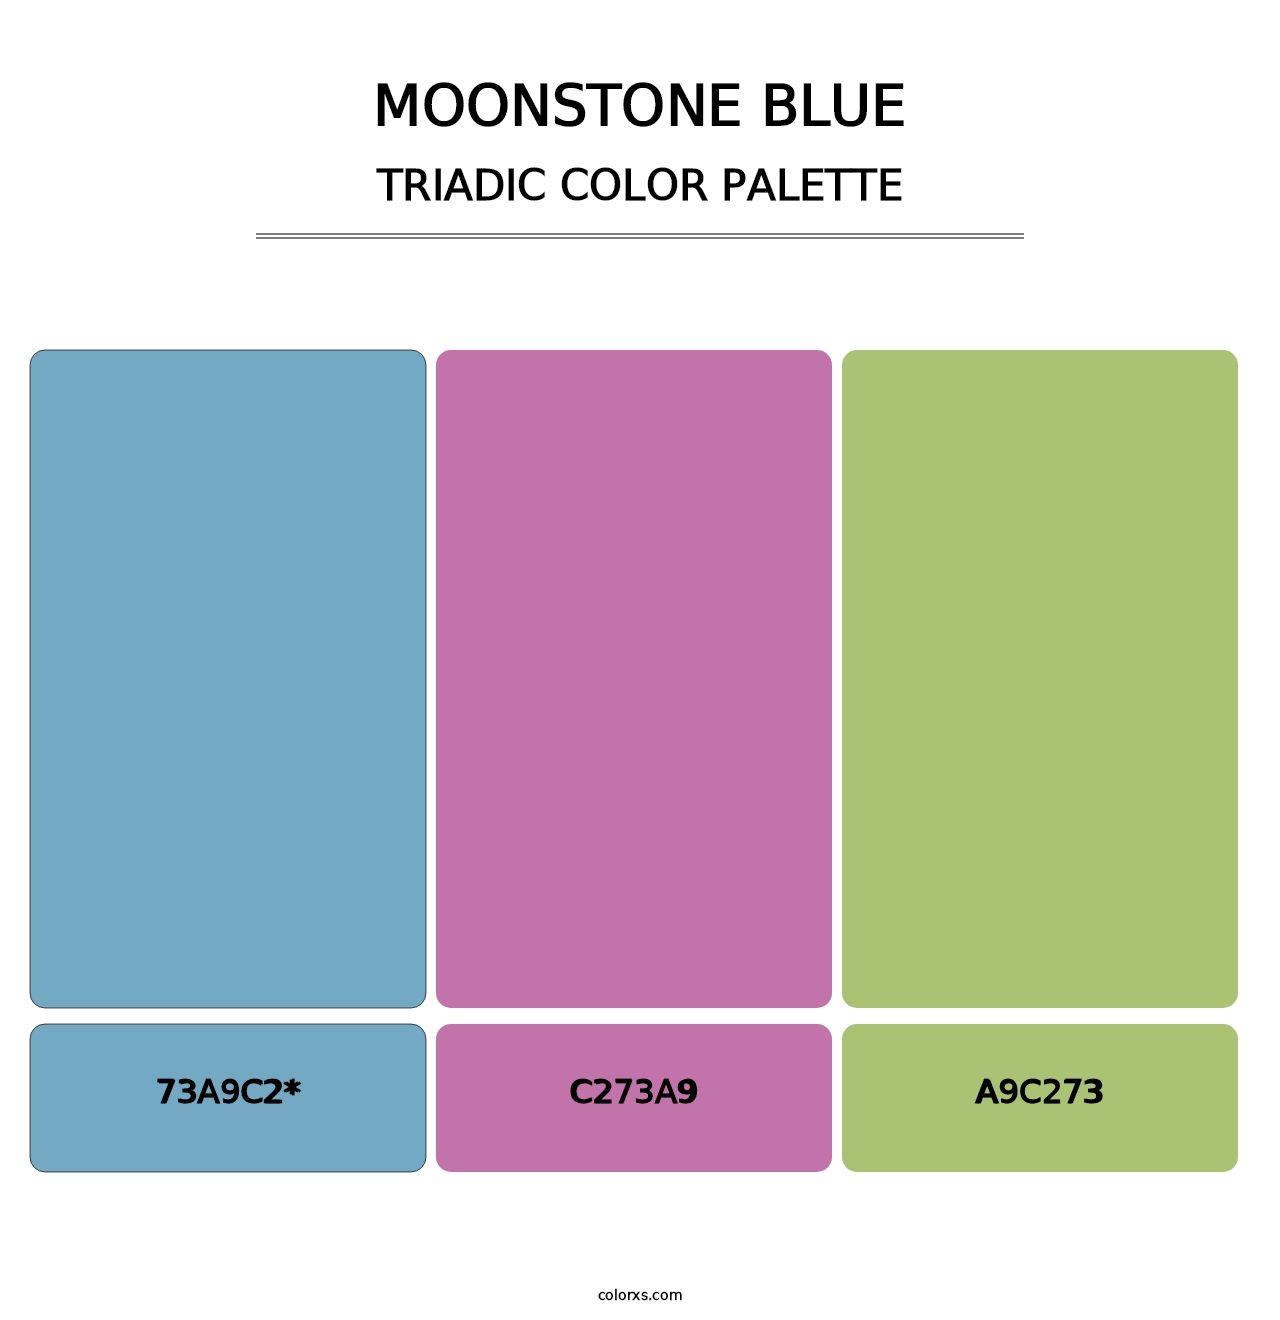 Moonstone Blue - Triadic Color Palette